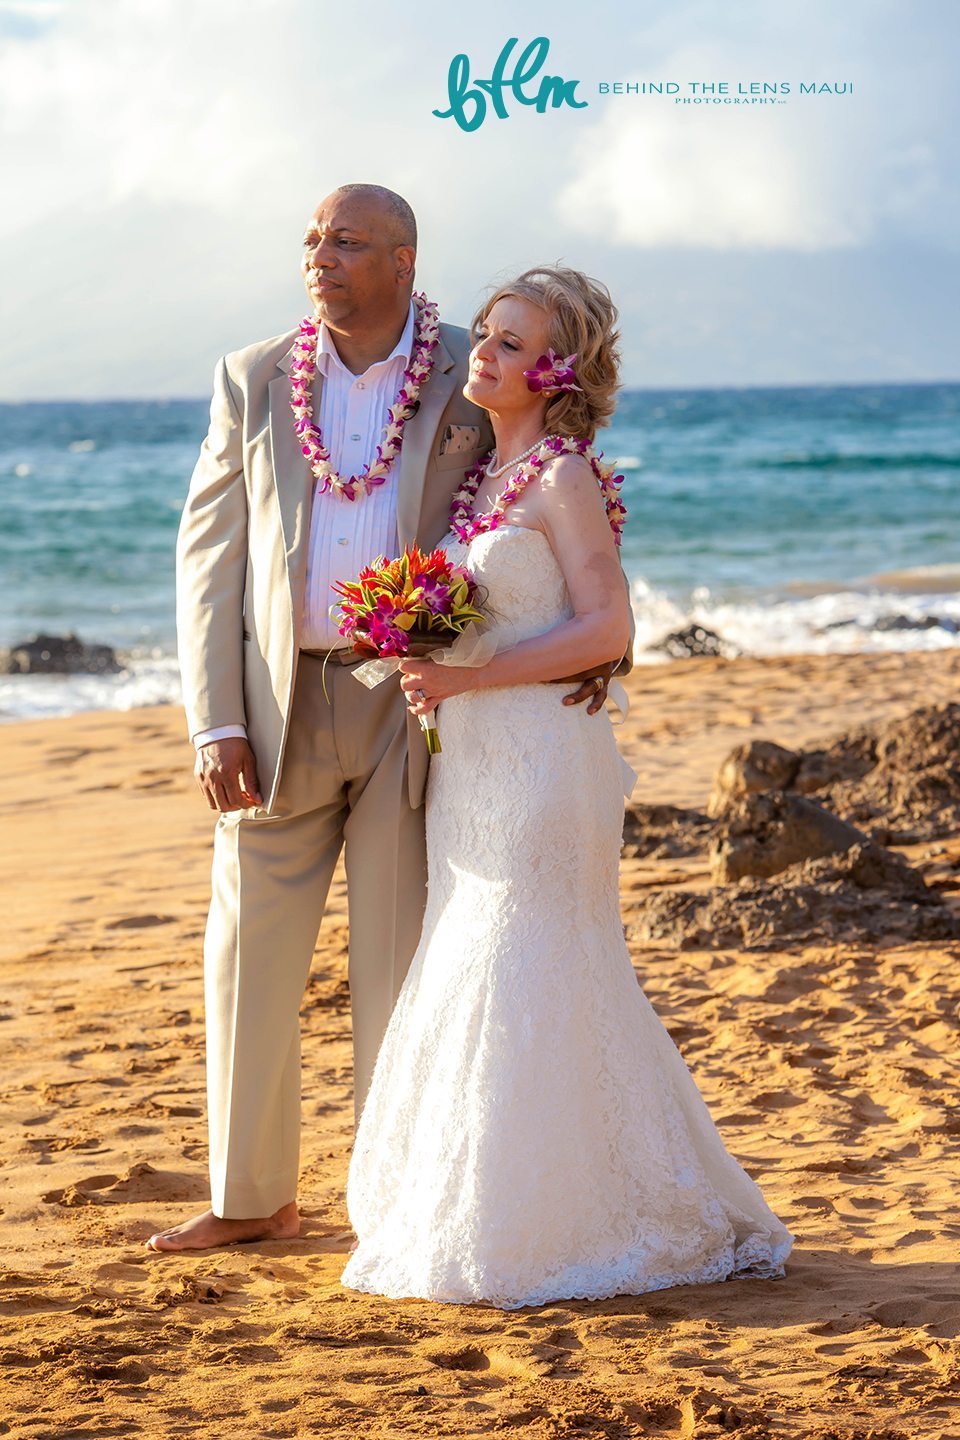 Maui Wedding Photographers 9_Behind The Lens Maui.jpg